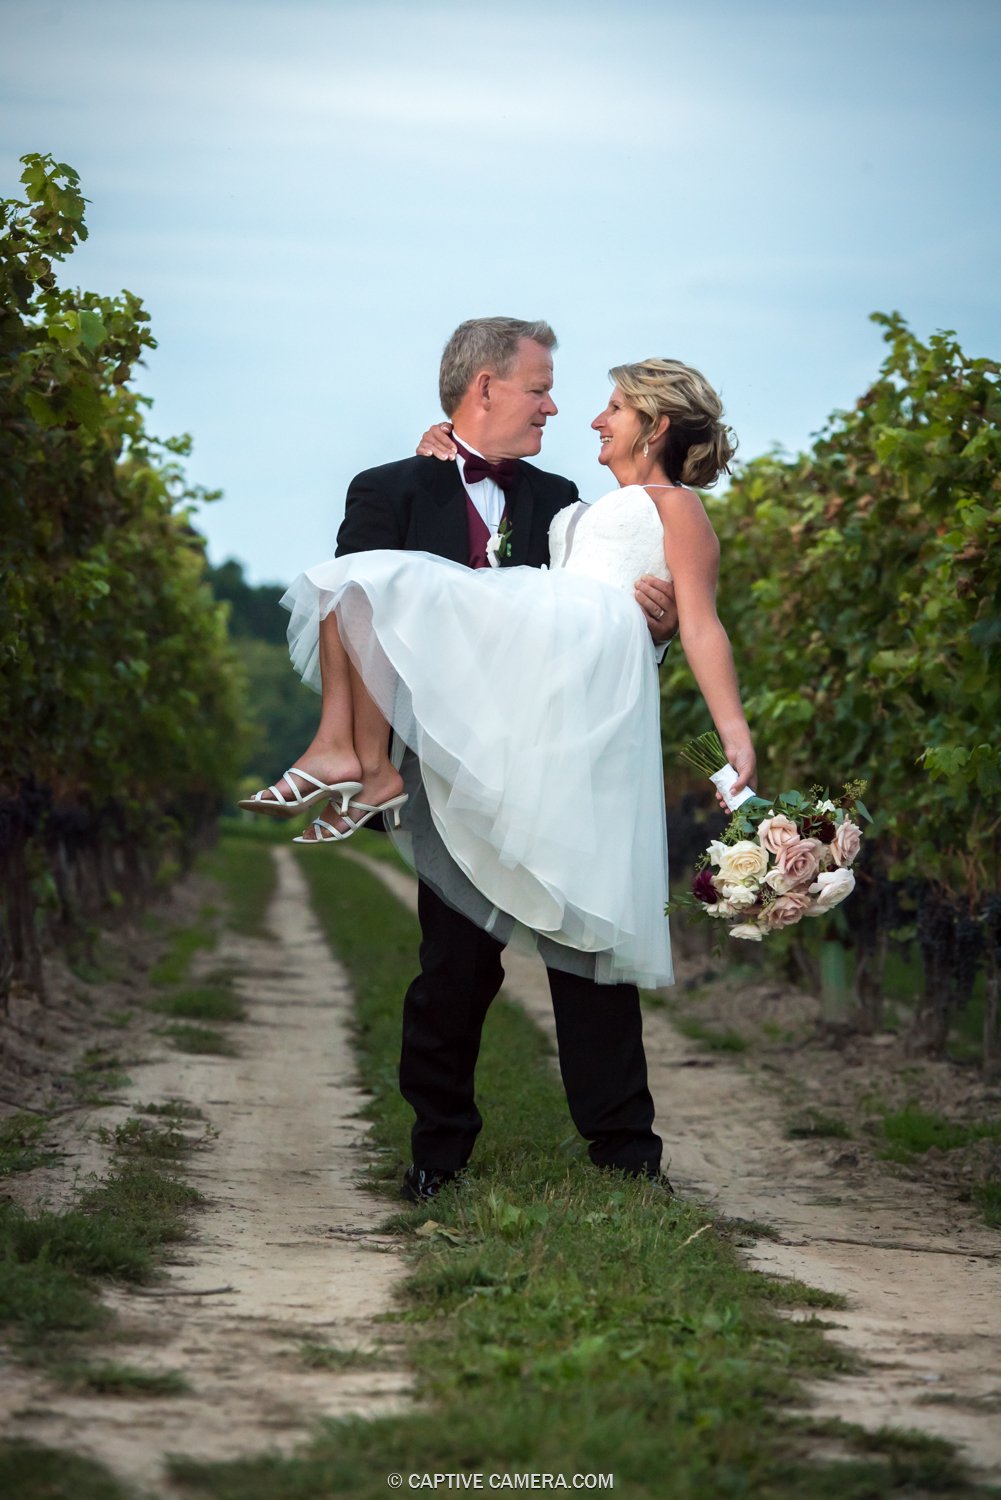 20230916 - Wedding - Mel and Erwin - Toronto Wedding Photographer - Captive Camera - CC1_9878.jpg